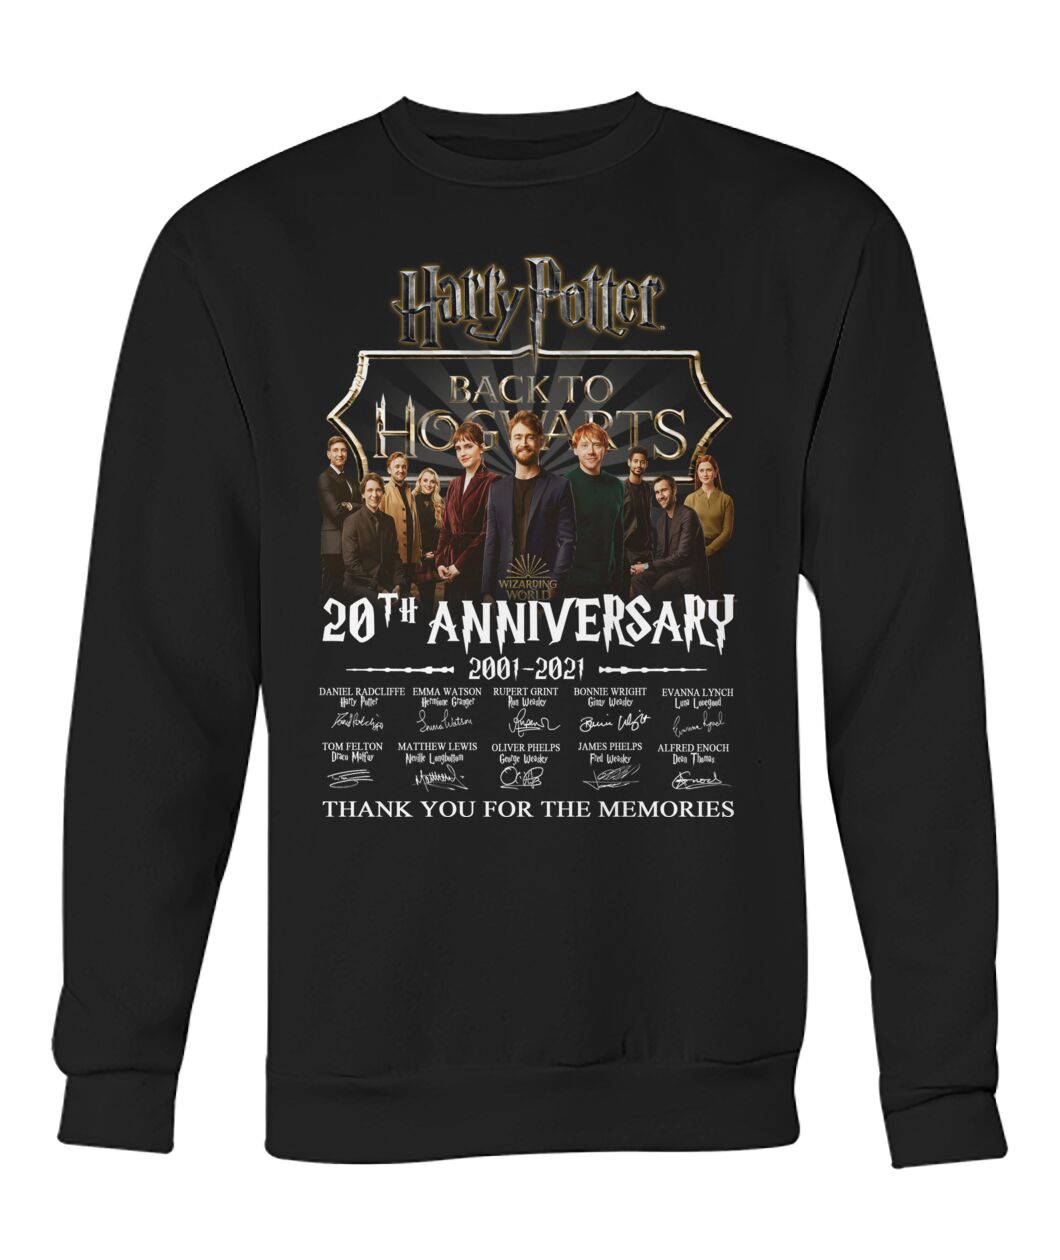 Harry Potter Back to Hogwarts 20th Anniversary 2001-2021 shirt, hoodie 1